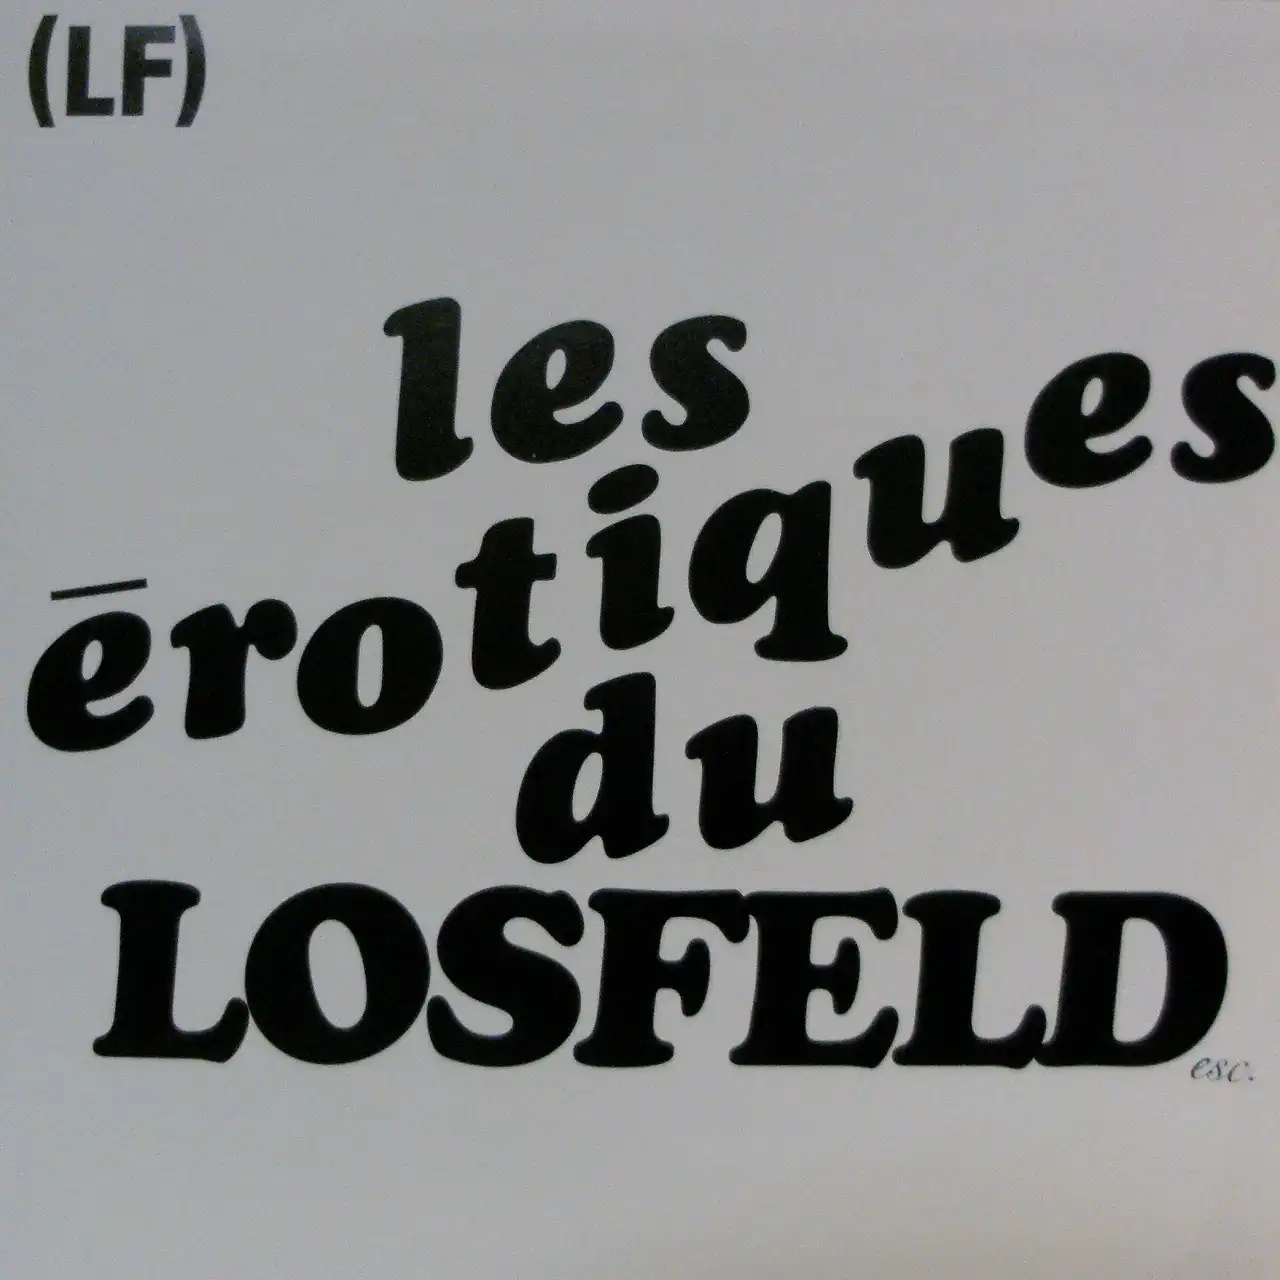 LOSFELD / LES EROTIQUES DU LOSFELD